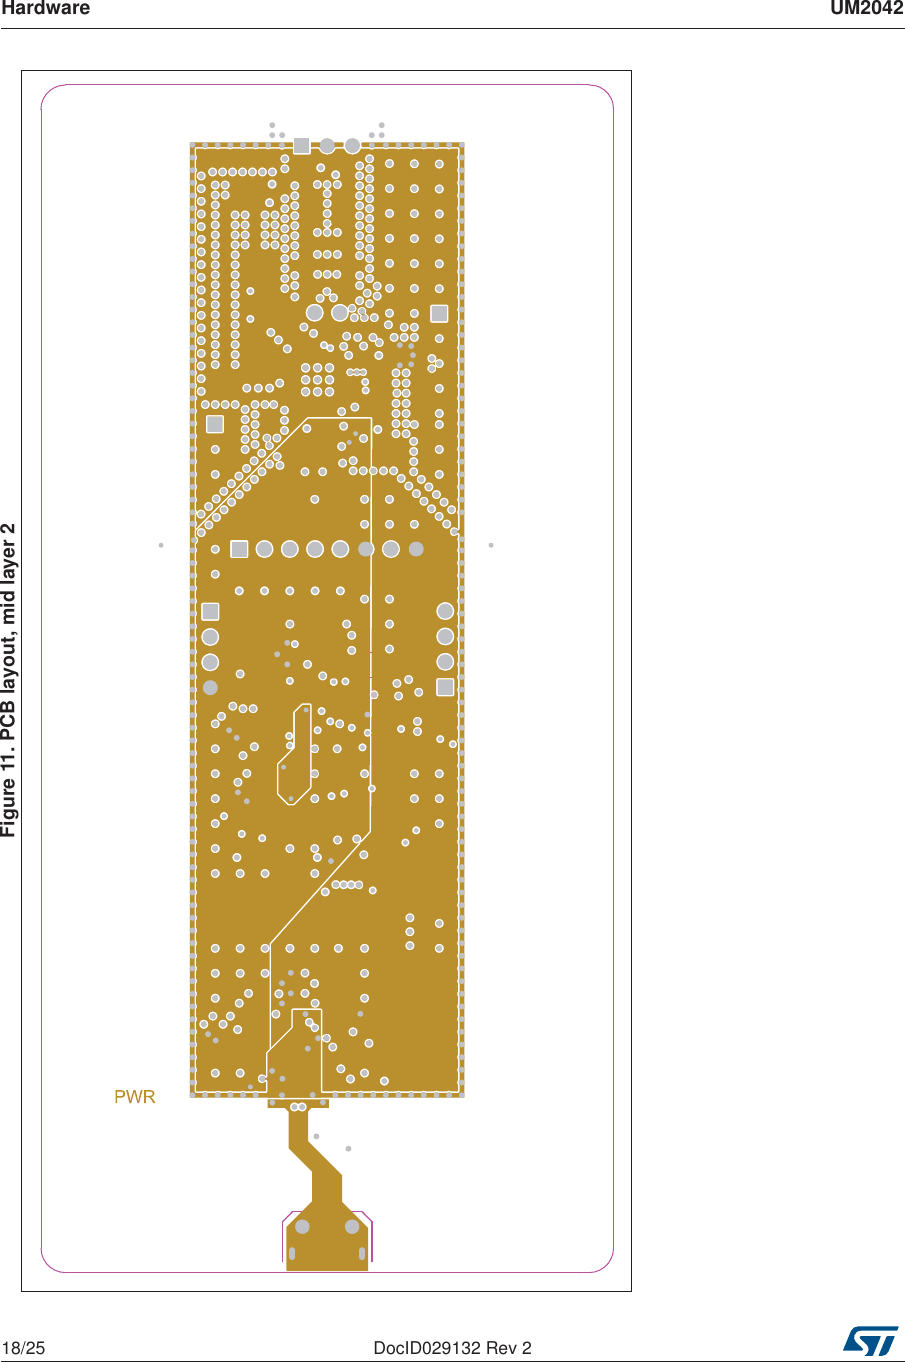 Hardware UM204218/25 DocID029132 Rev 2Figure 11. PCB layout, mid layer 2